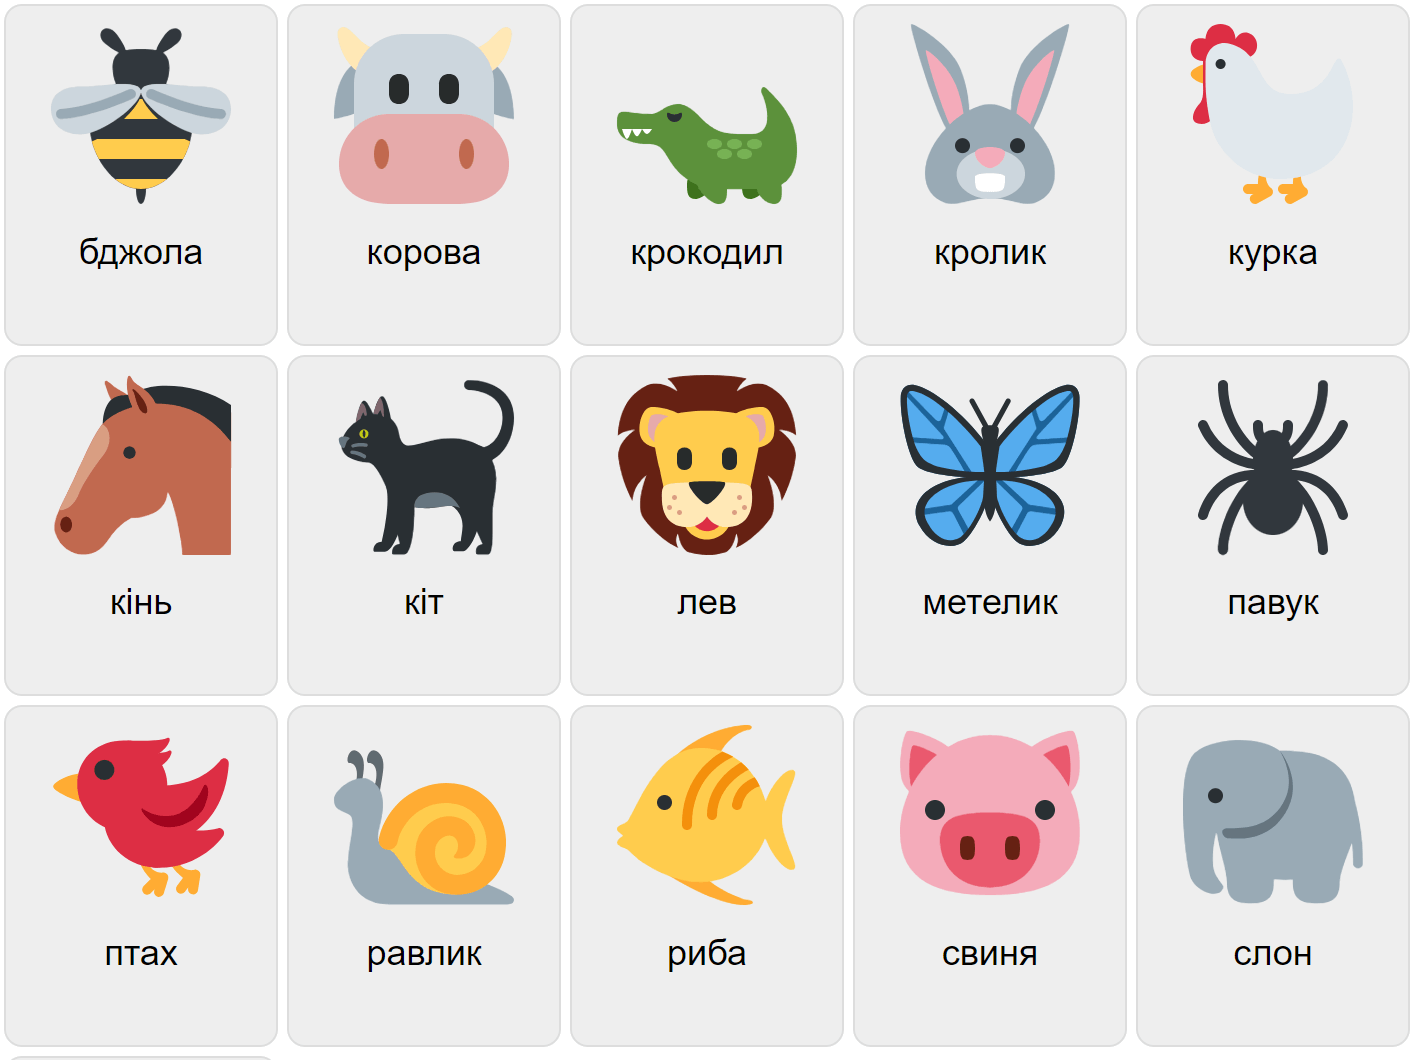 Animals in Ukrainian 1